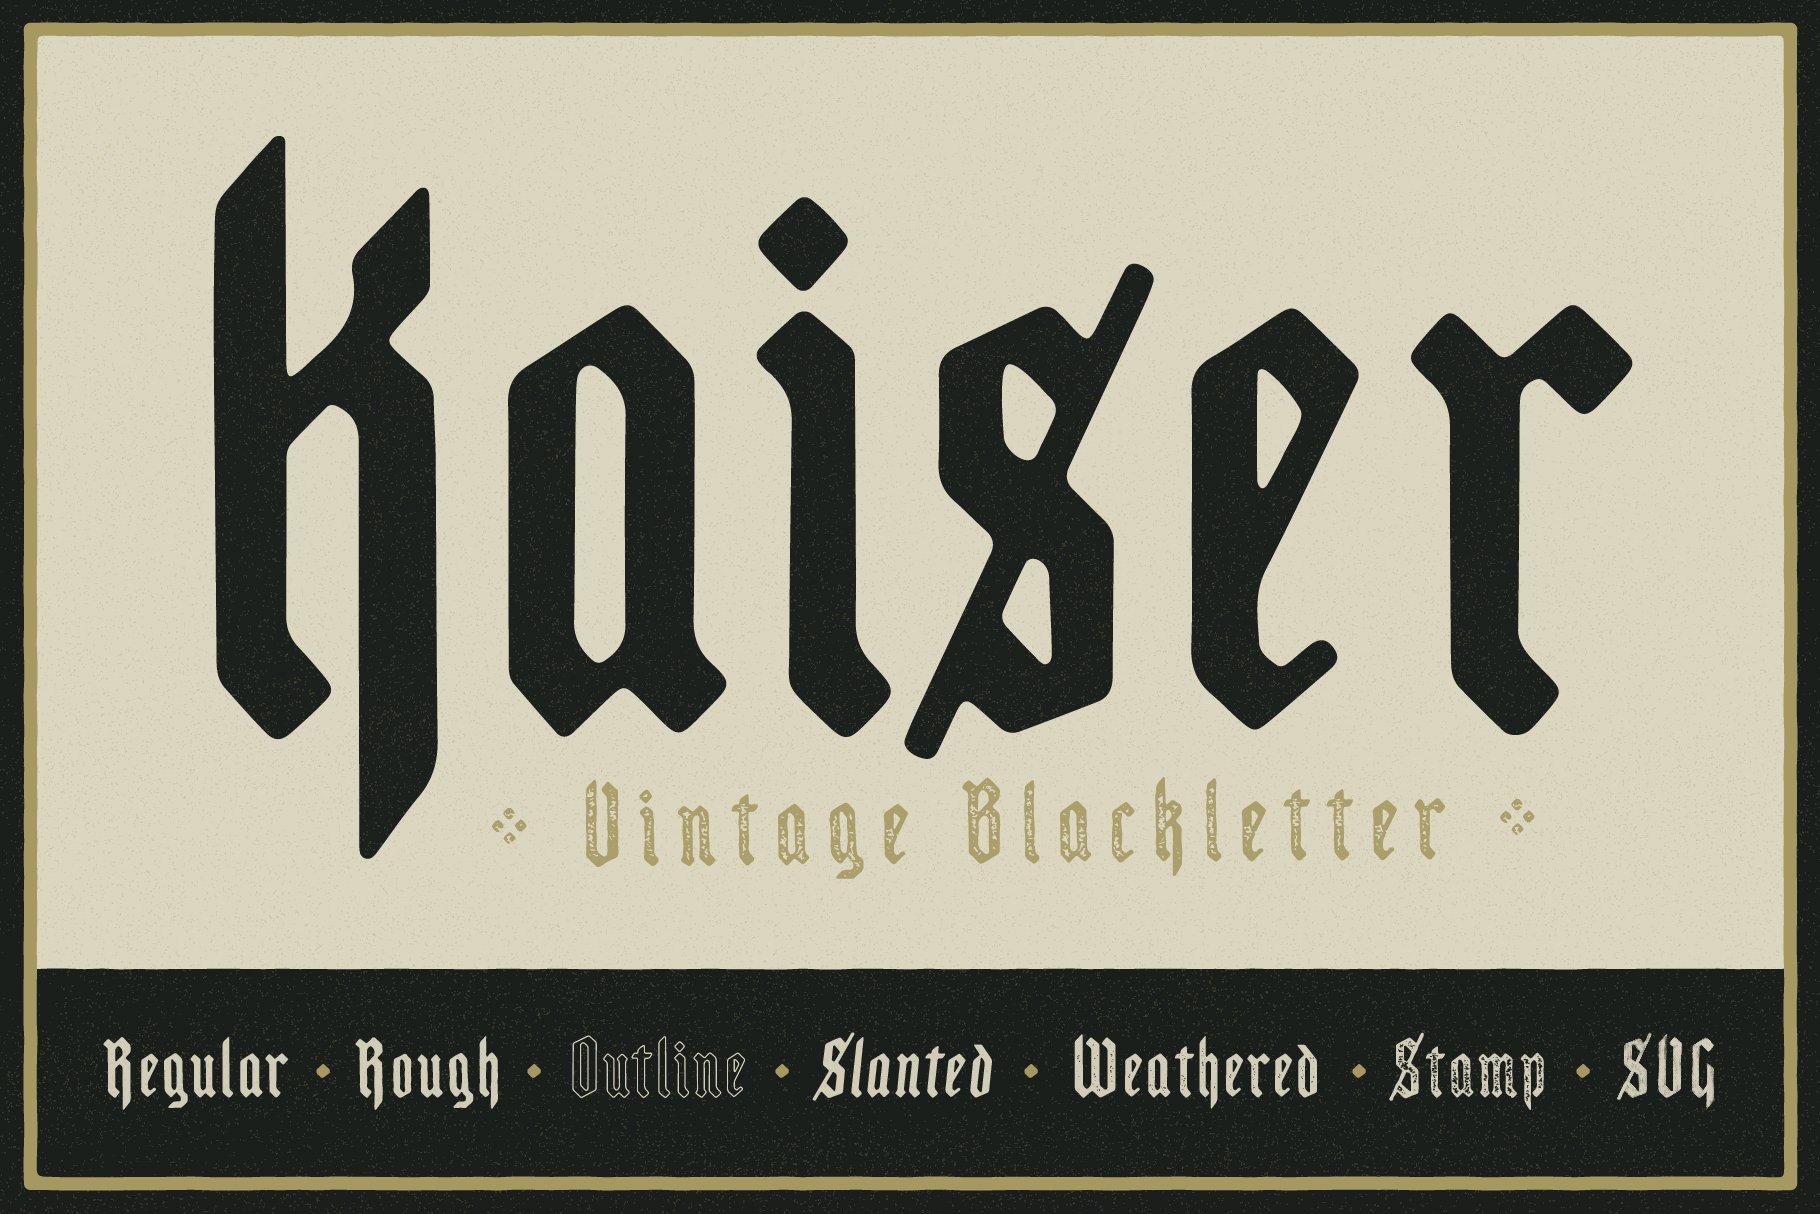 Kaiser - Vintage Blackletter cover image.